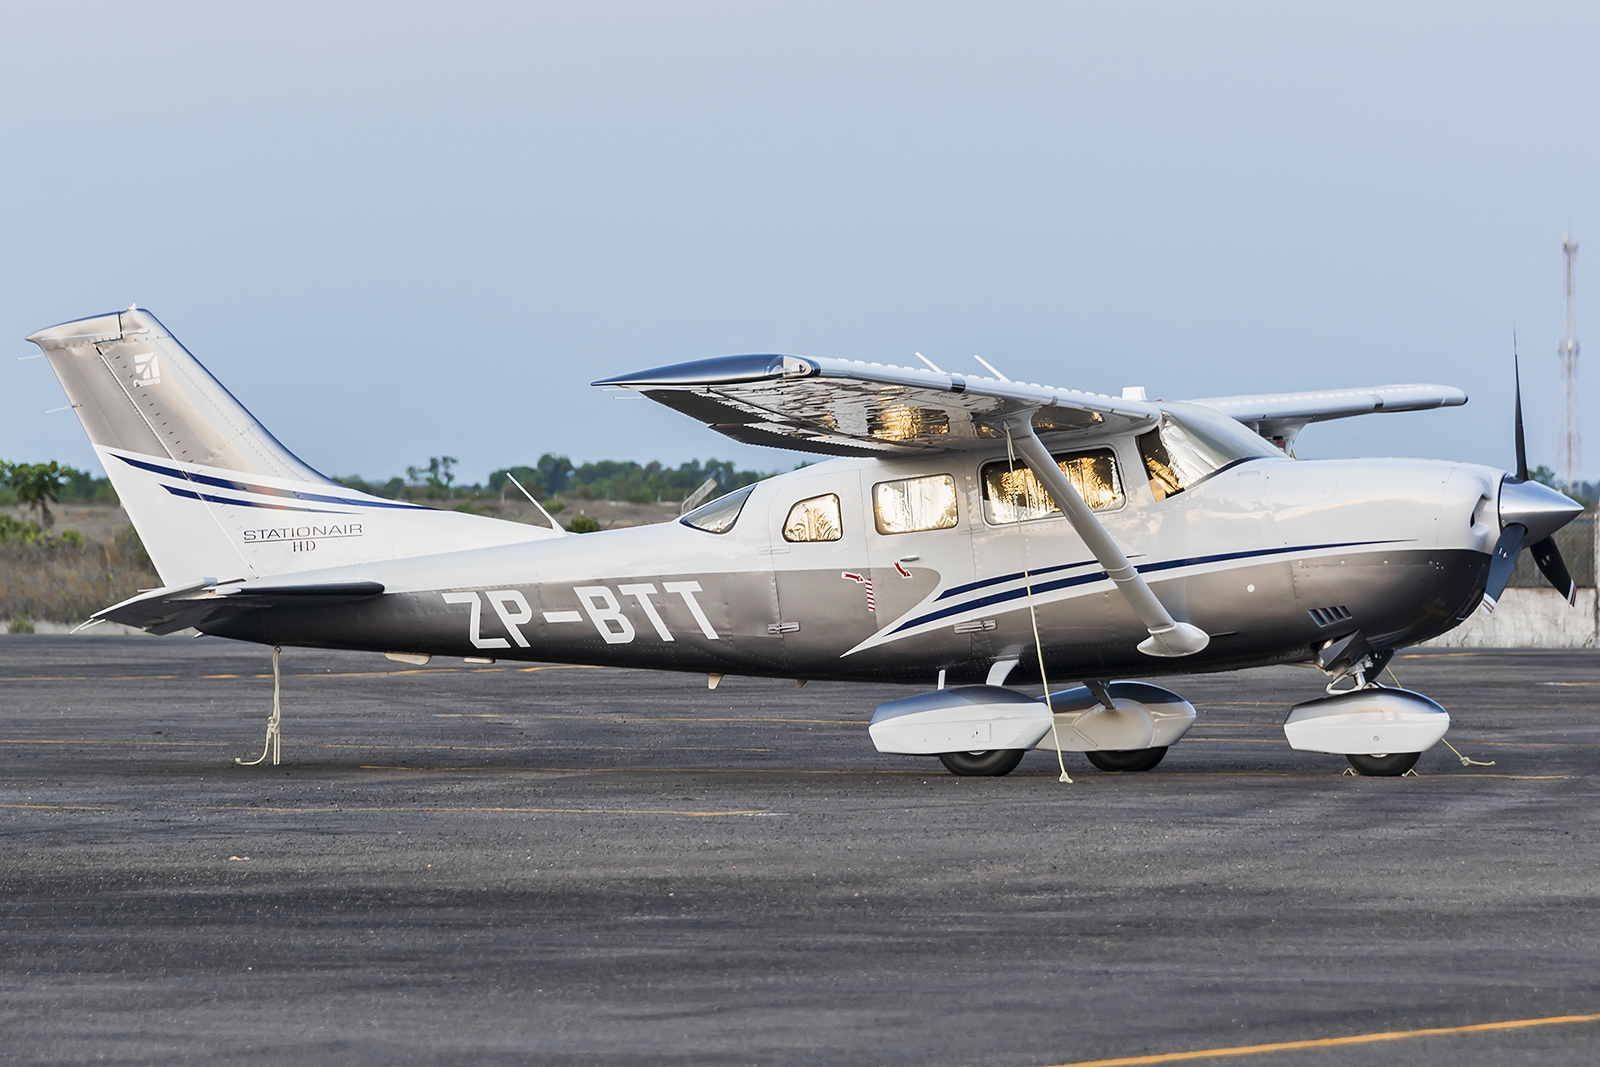 ZP-BTT - Cessna T206H Turbo Stationair